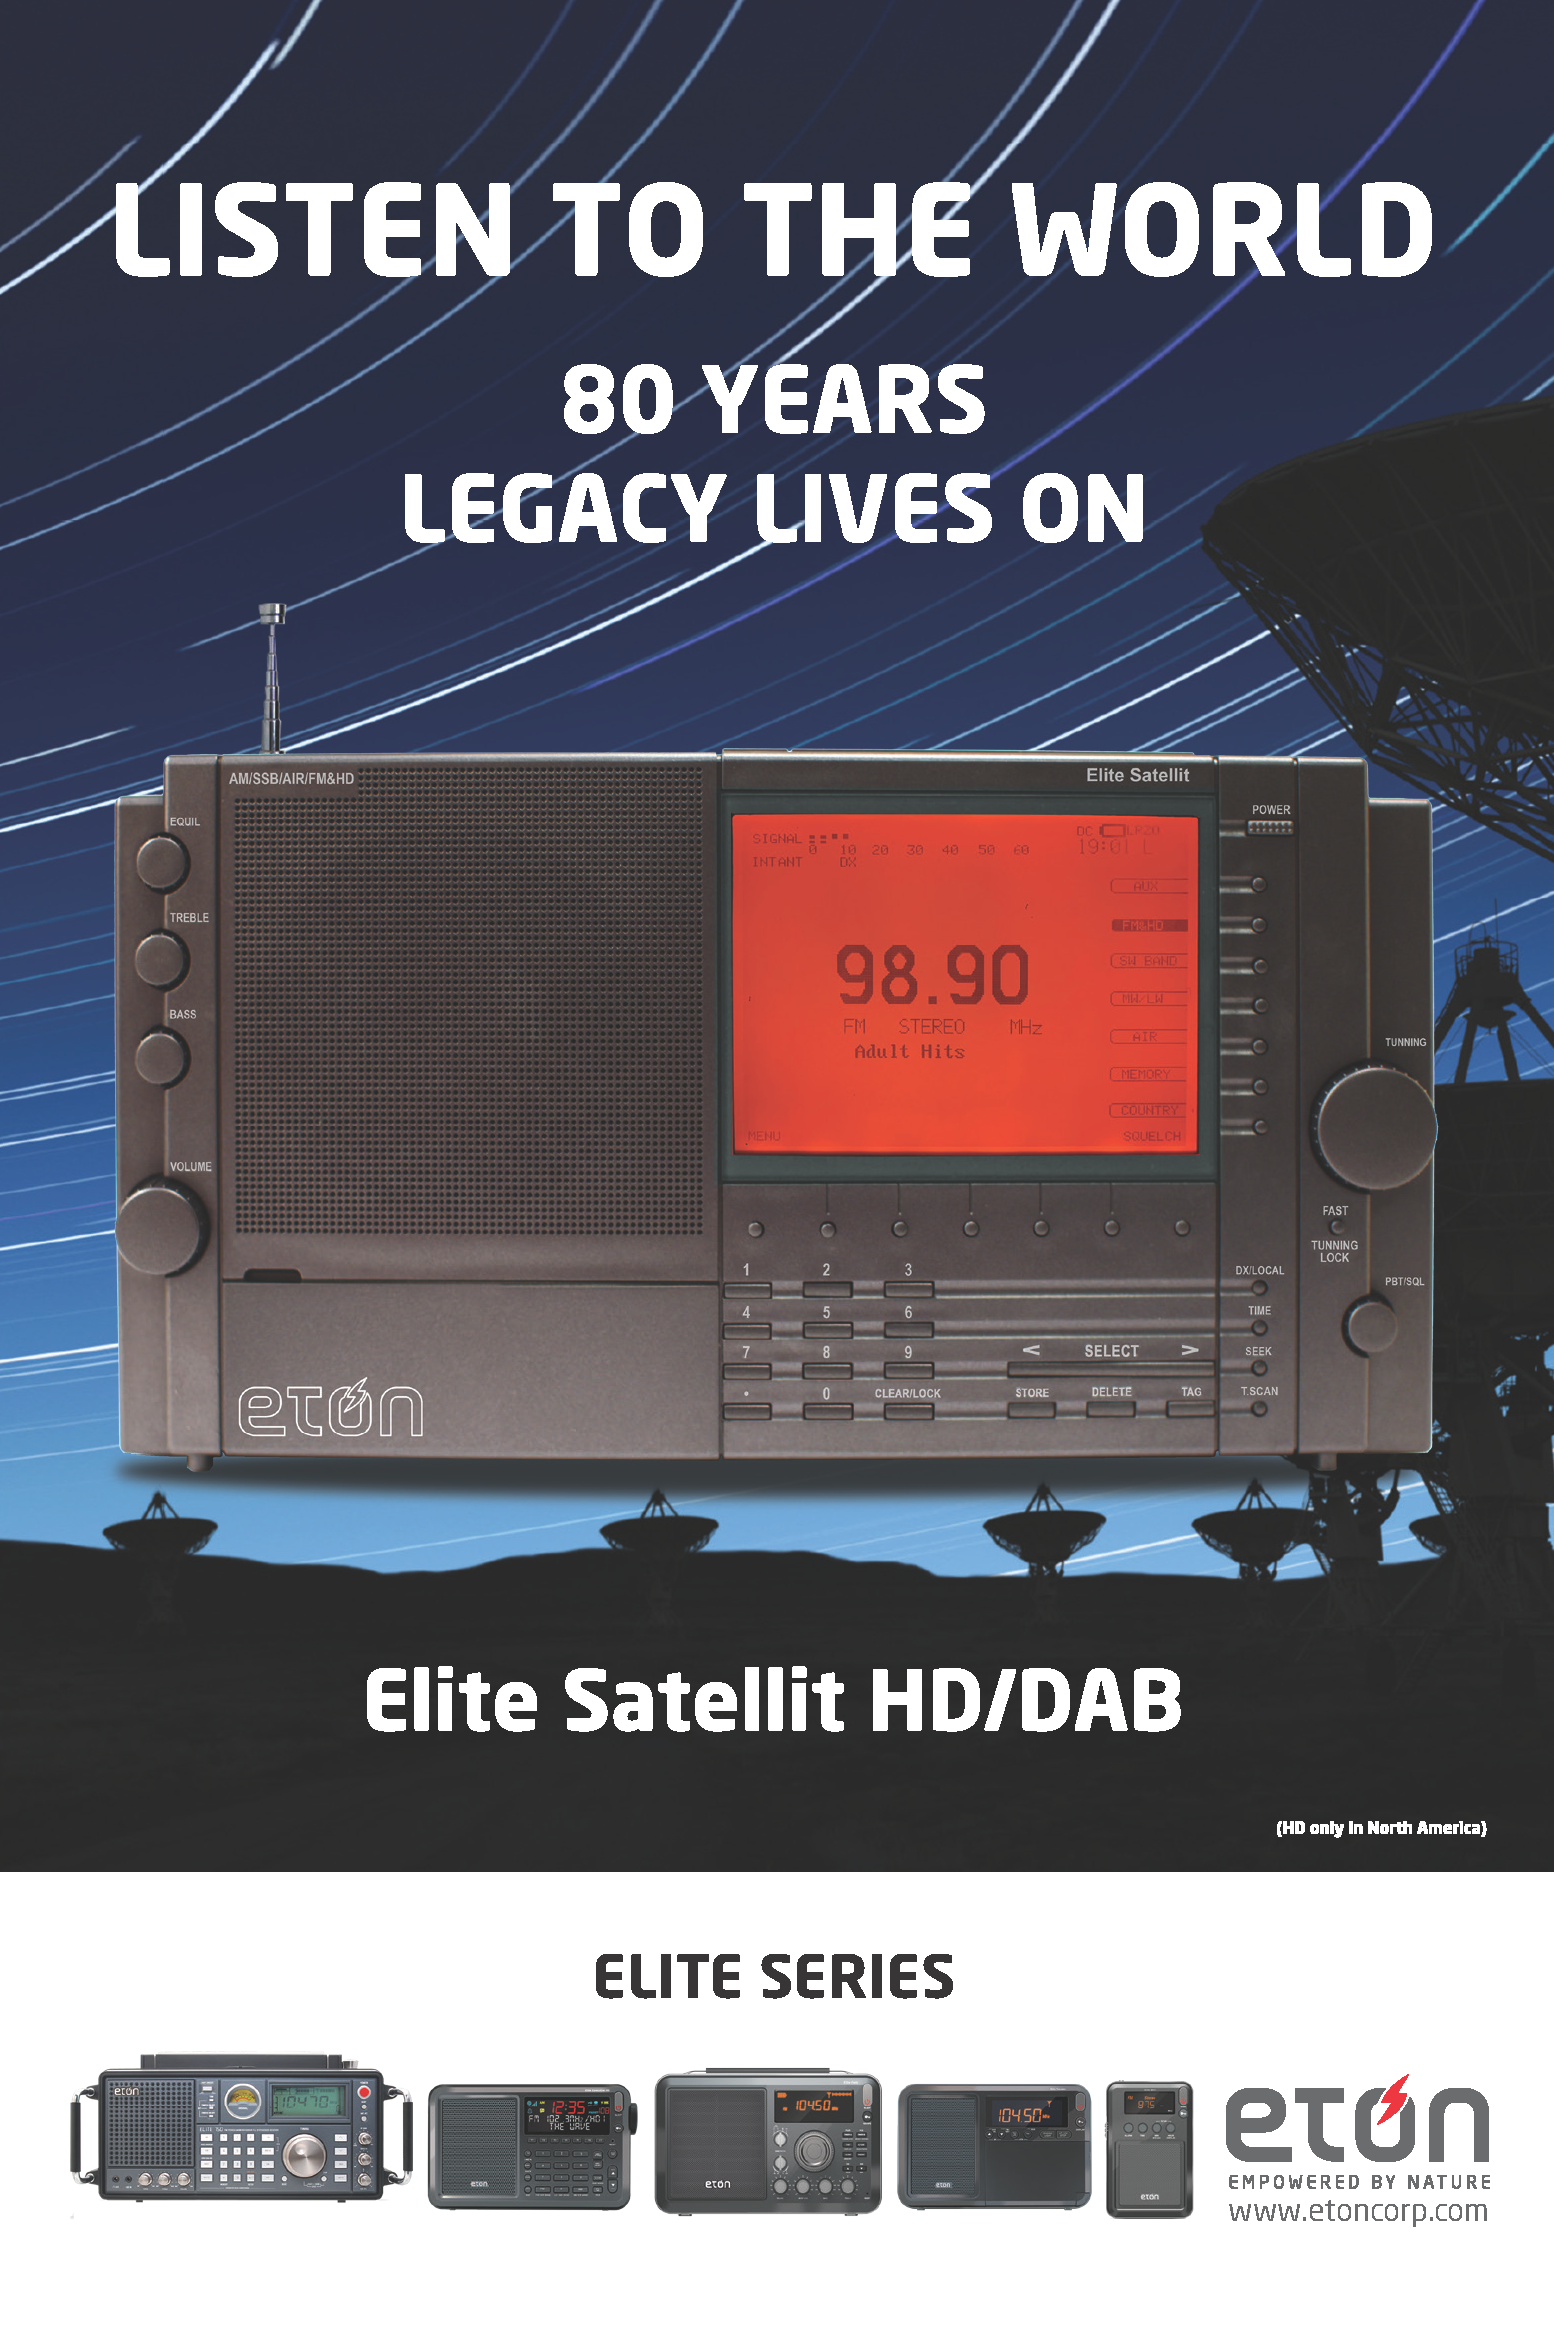 Advertisement from eton for the Elite Satelite HD/DAB